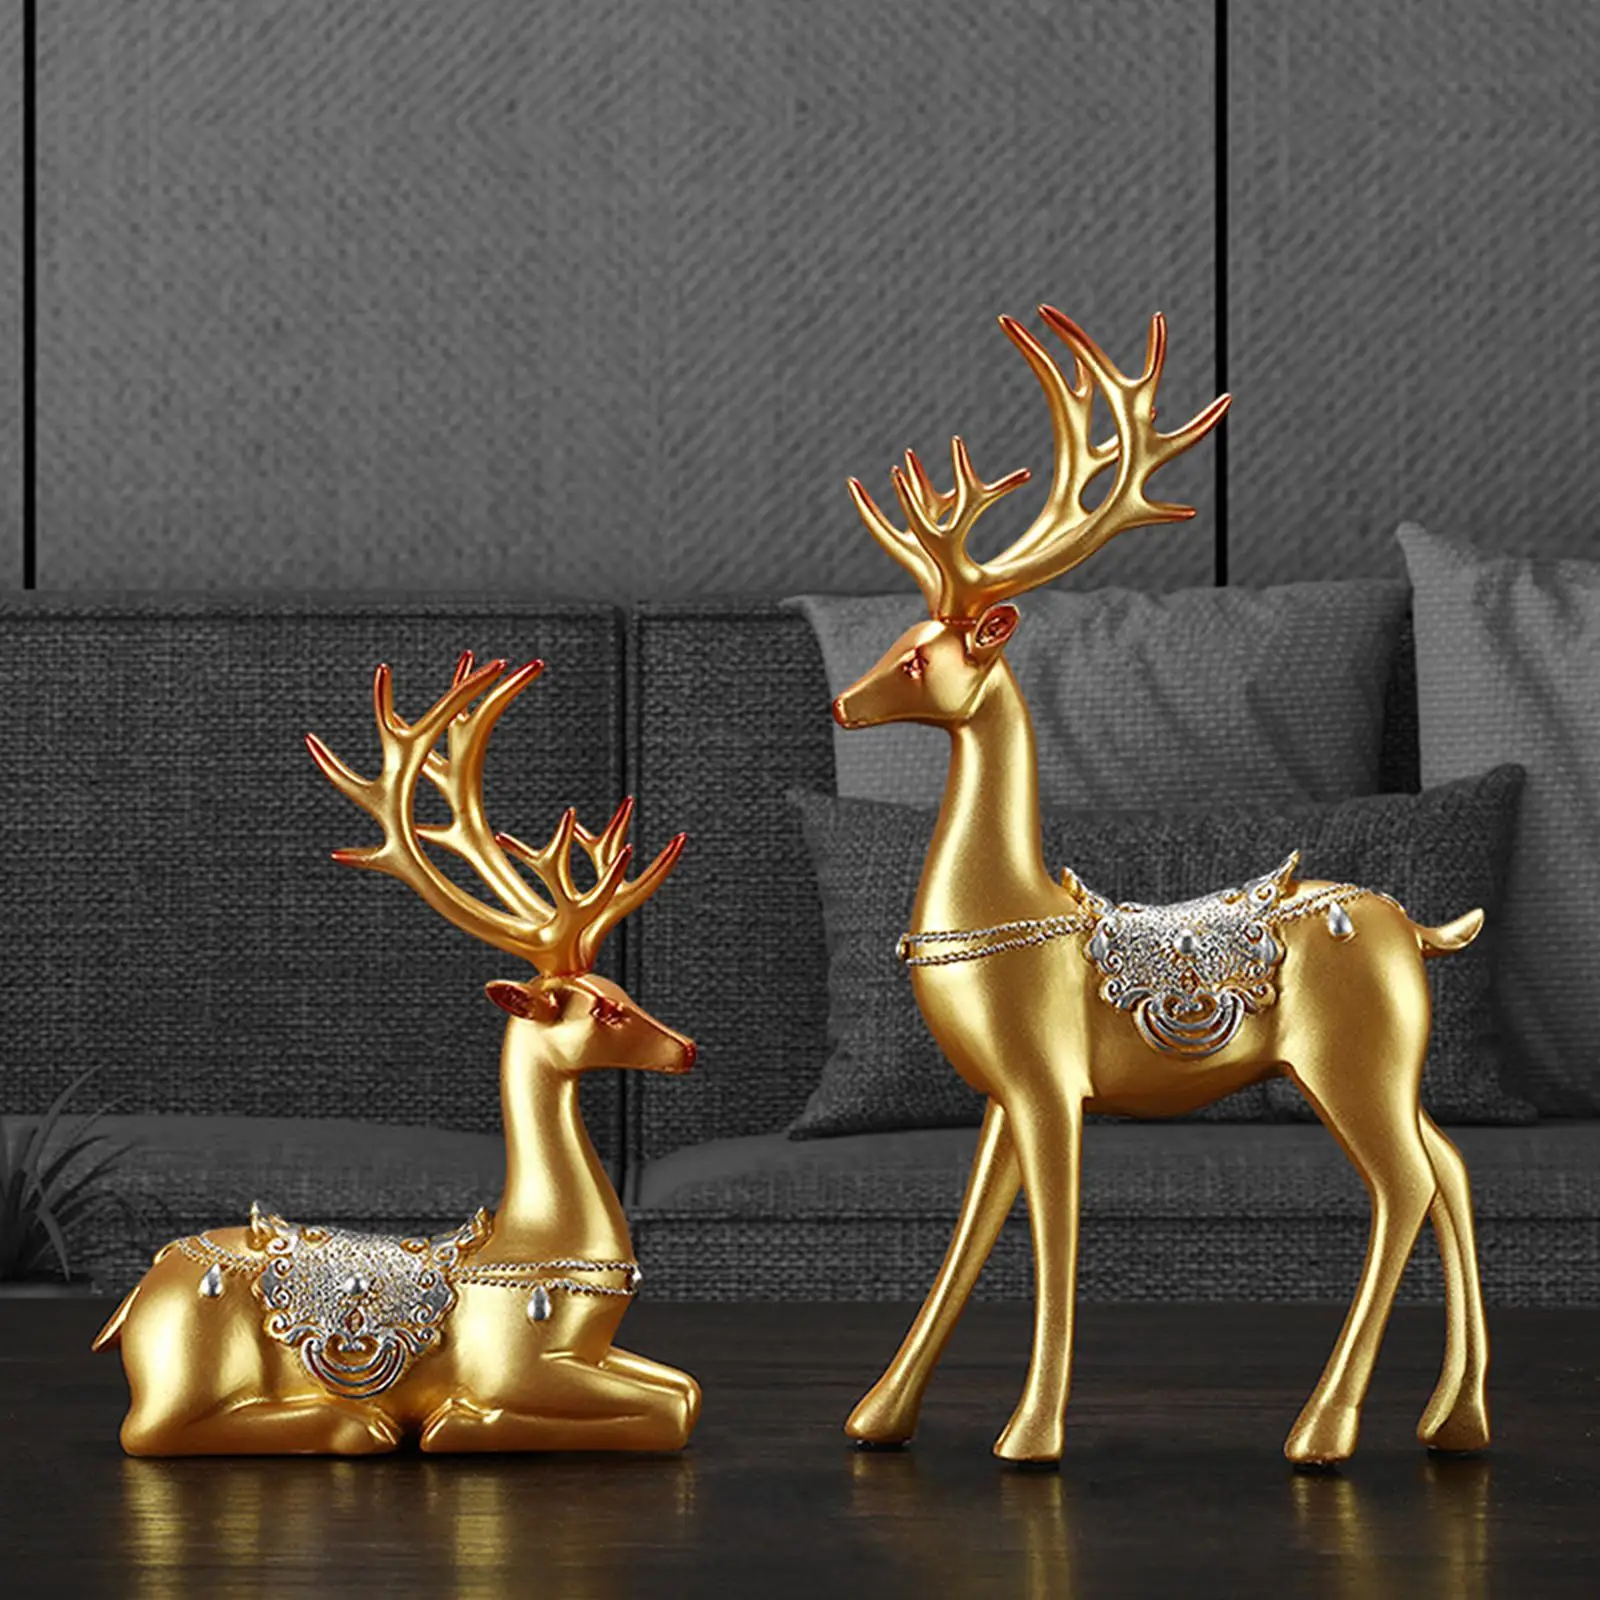 Set of 2 Reindeer Figurines Resin Deer Statues for Home Table Decoration